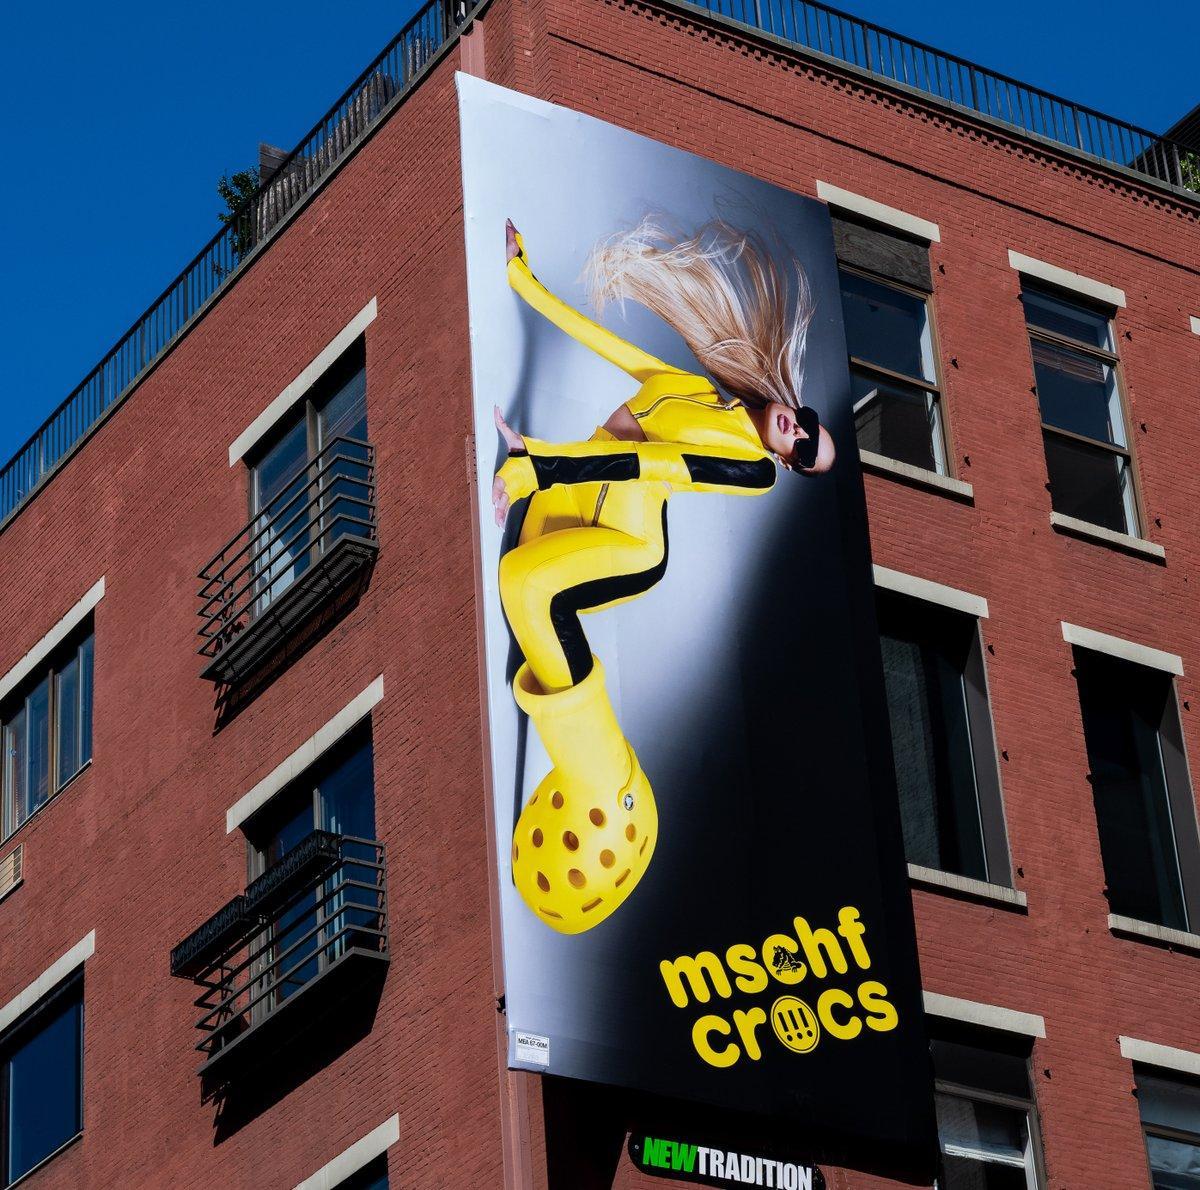 Pris crocs ad billboard - Copy